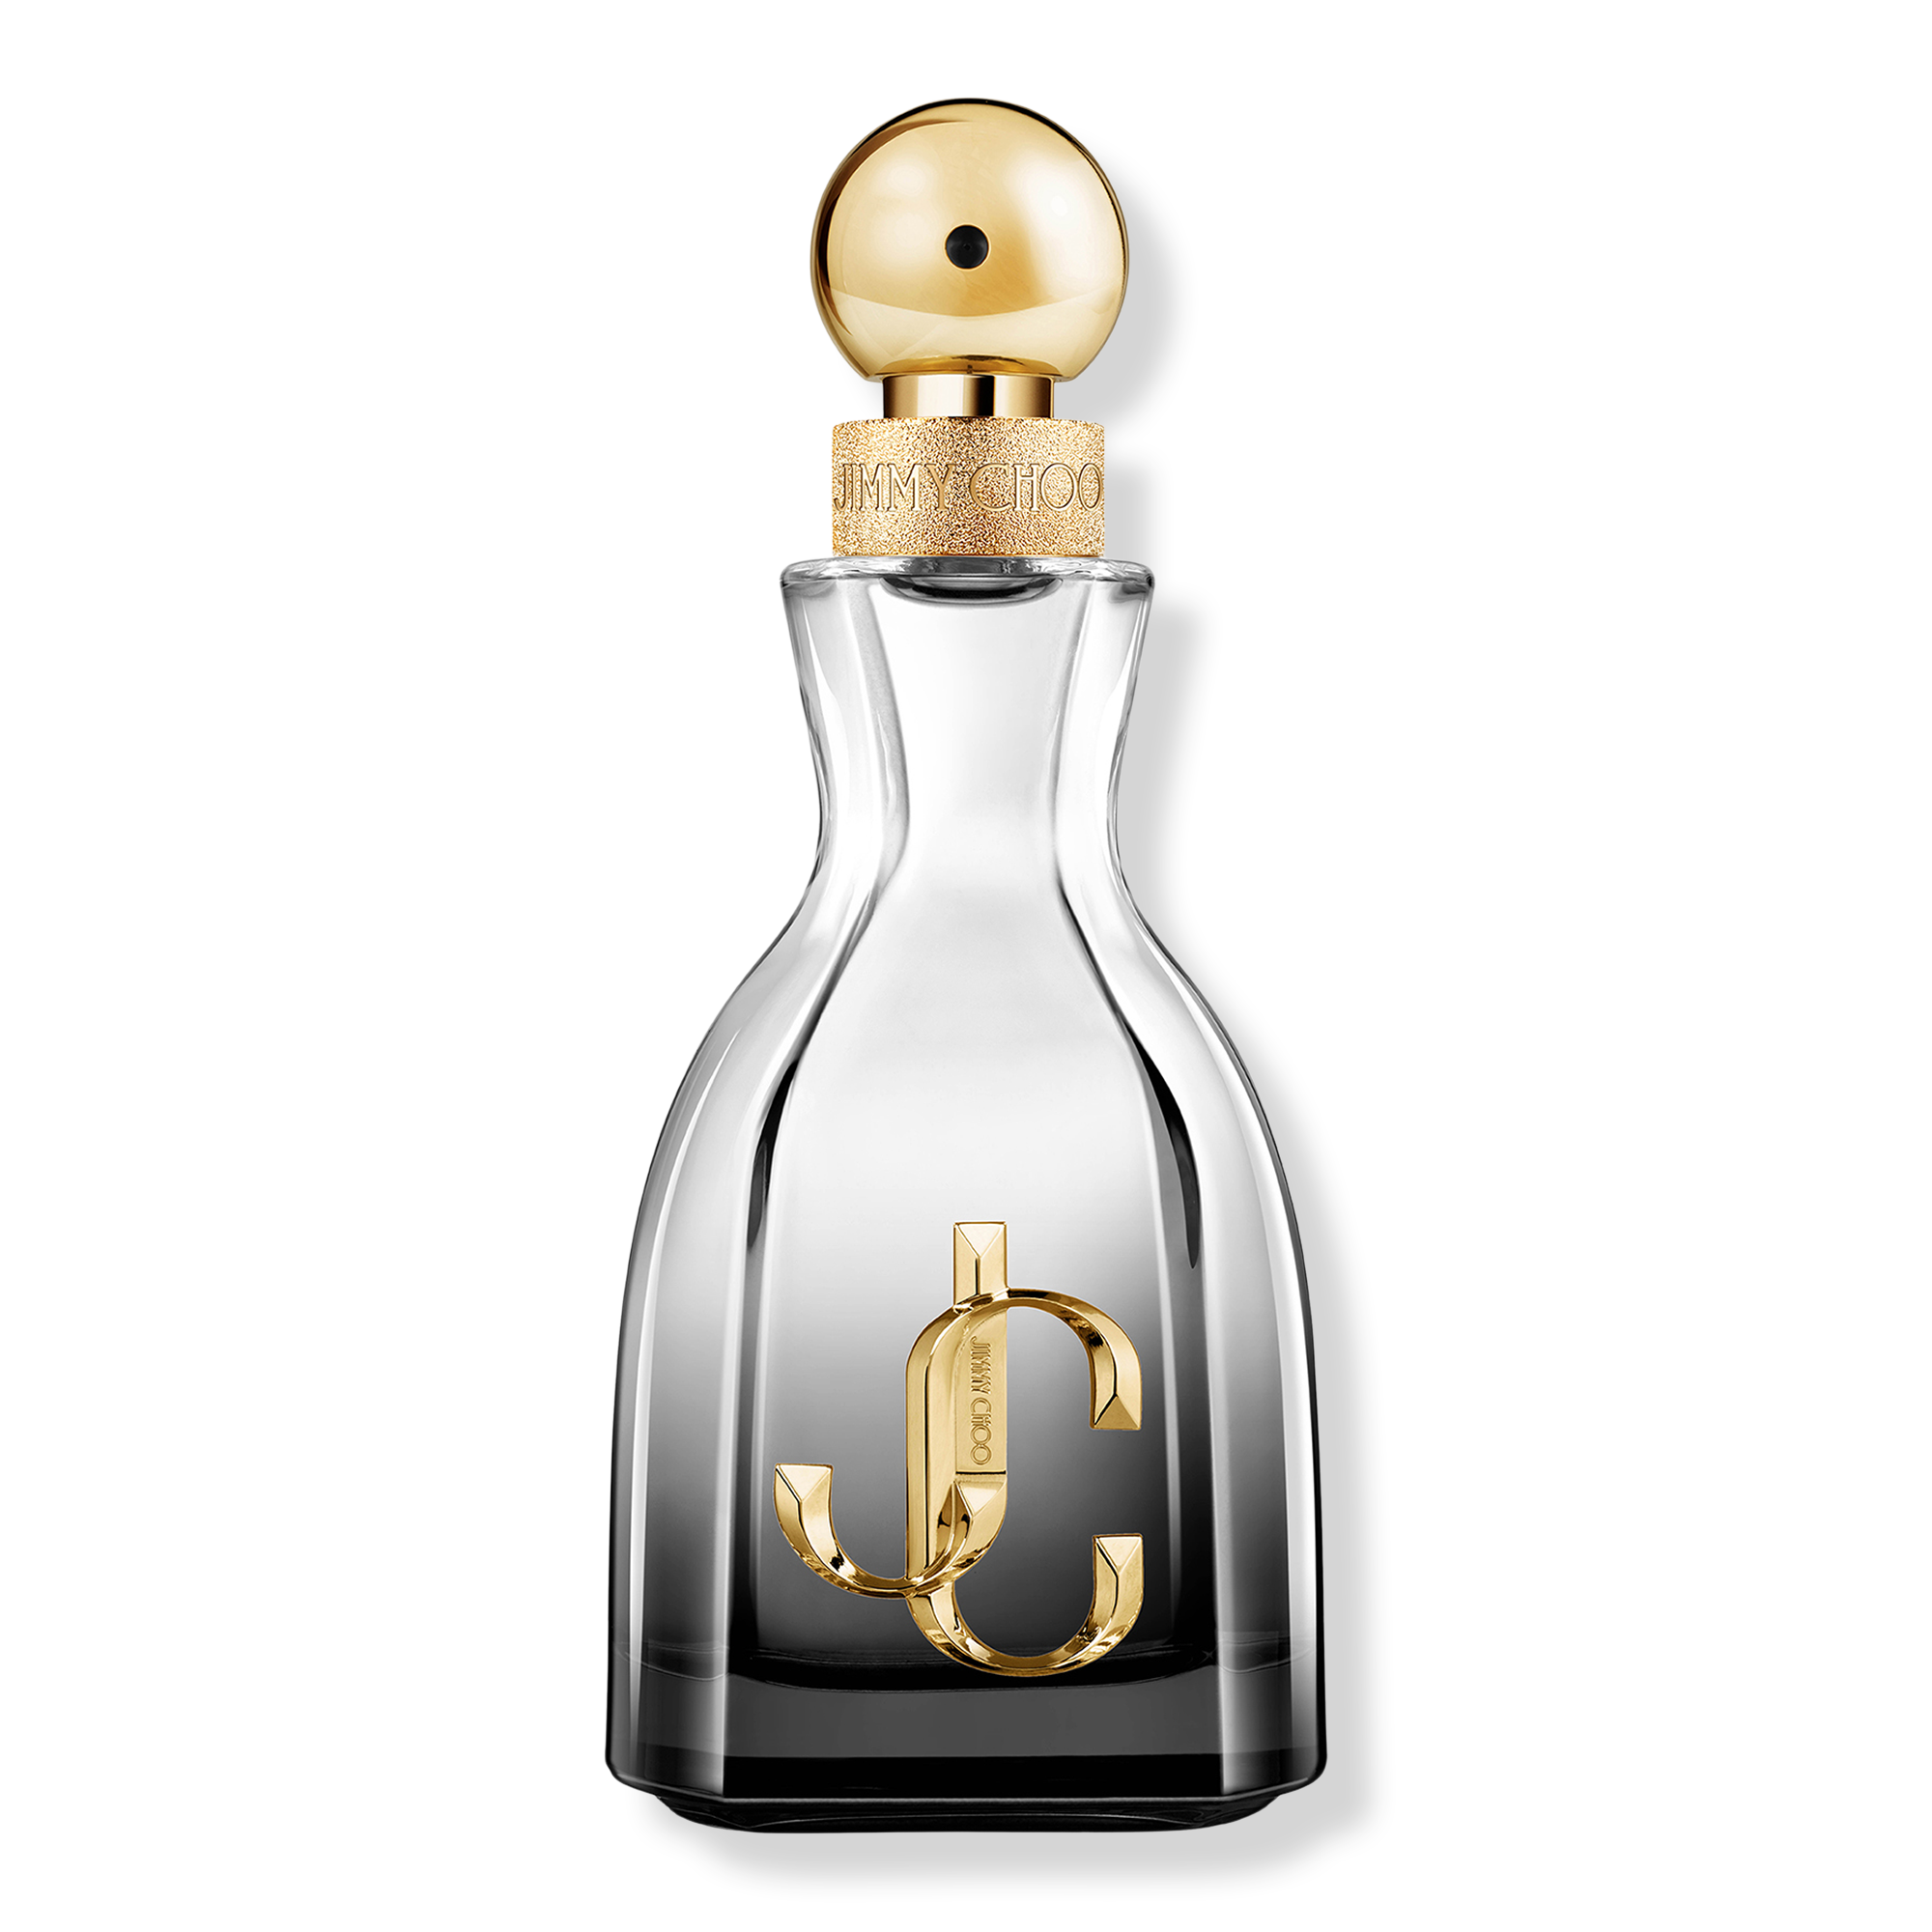 2.0 oz I Want Choo Forever Eau de Parfum - Jimmy Choo | Ulta Beauty